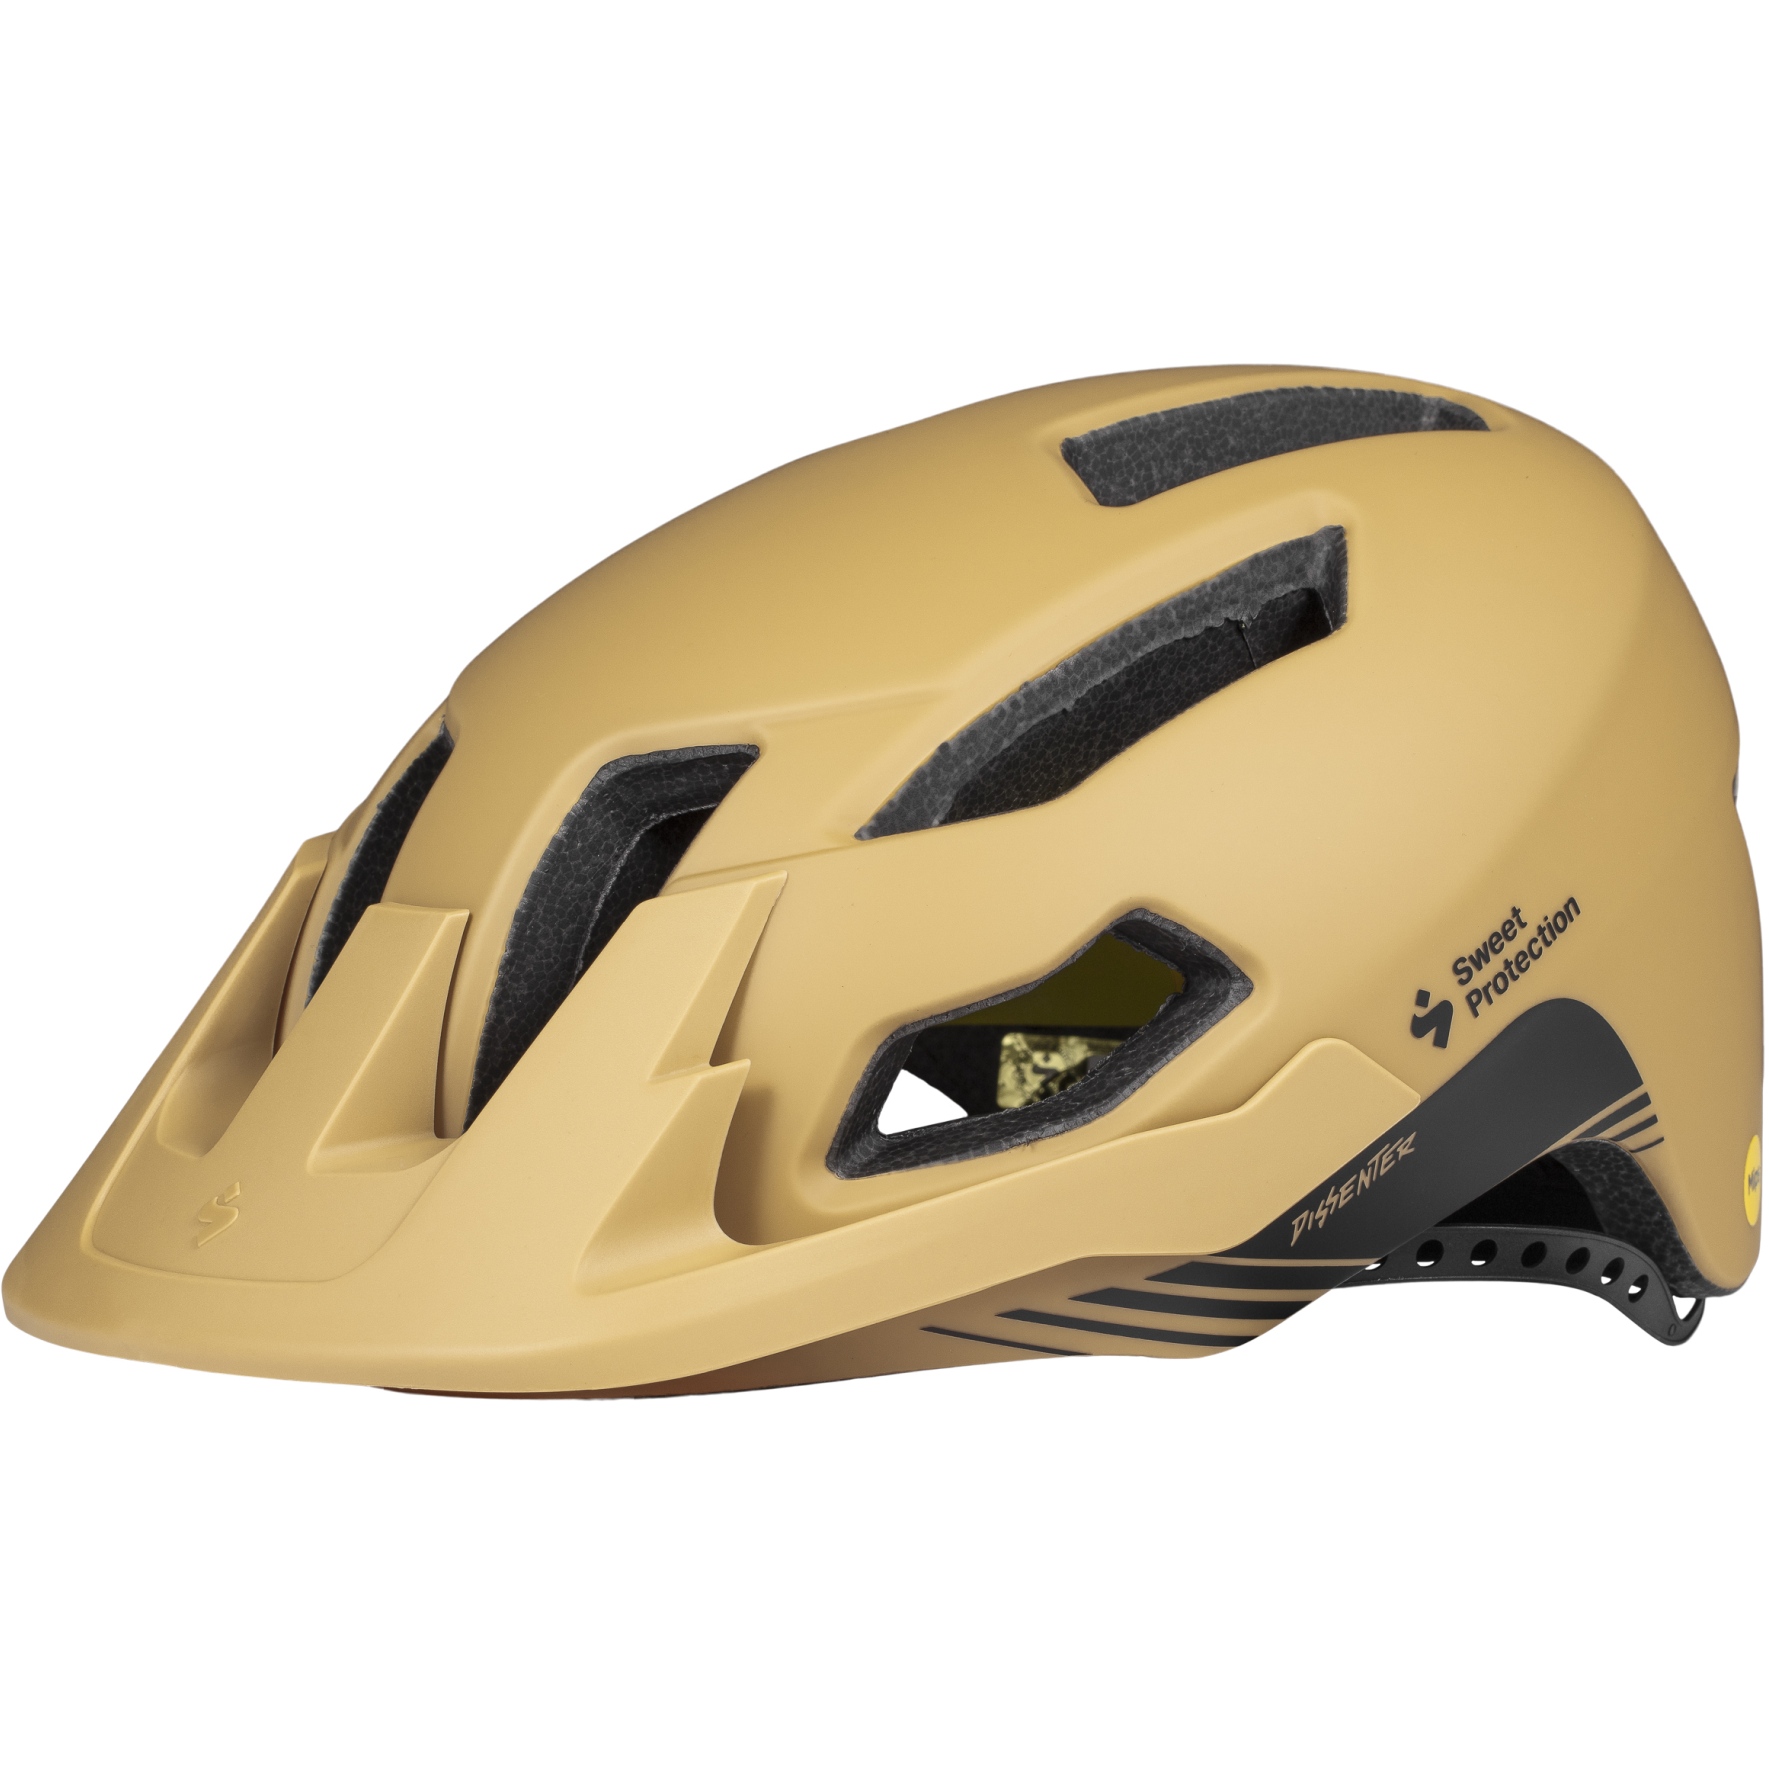 Image of SWEET Protection Dissenter MIPS Helmet - Dusk